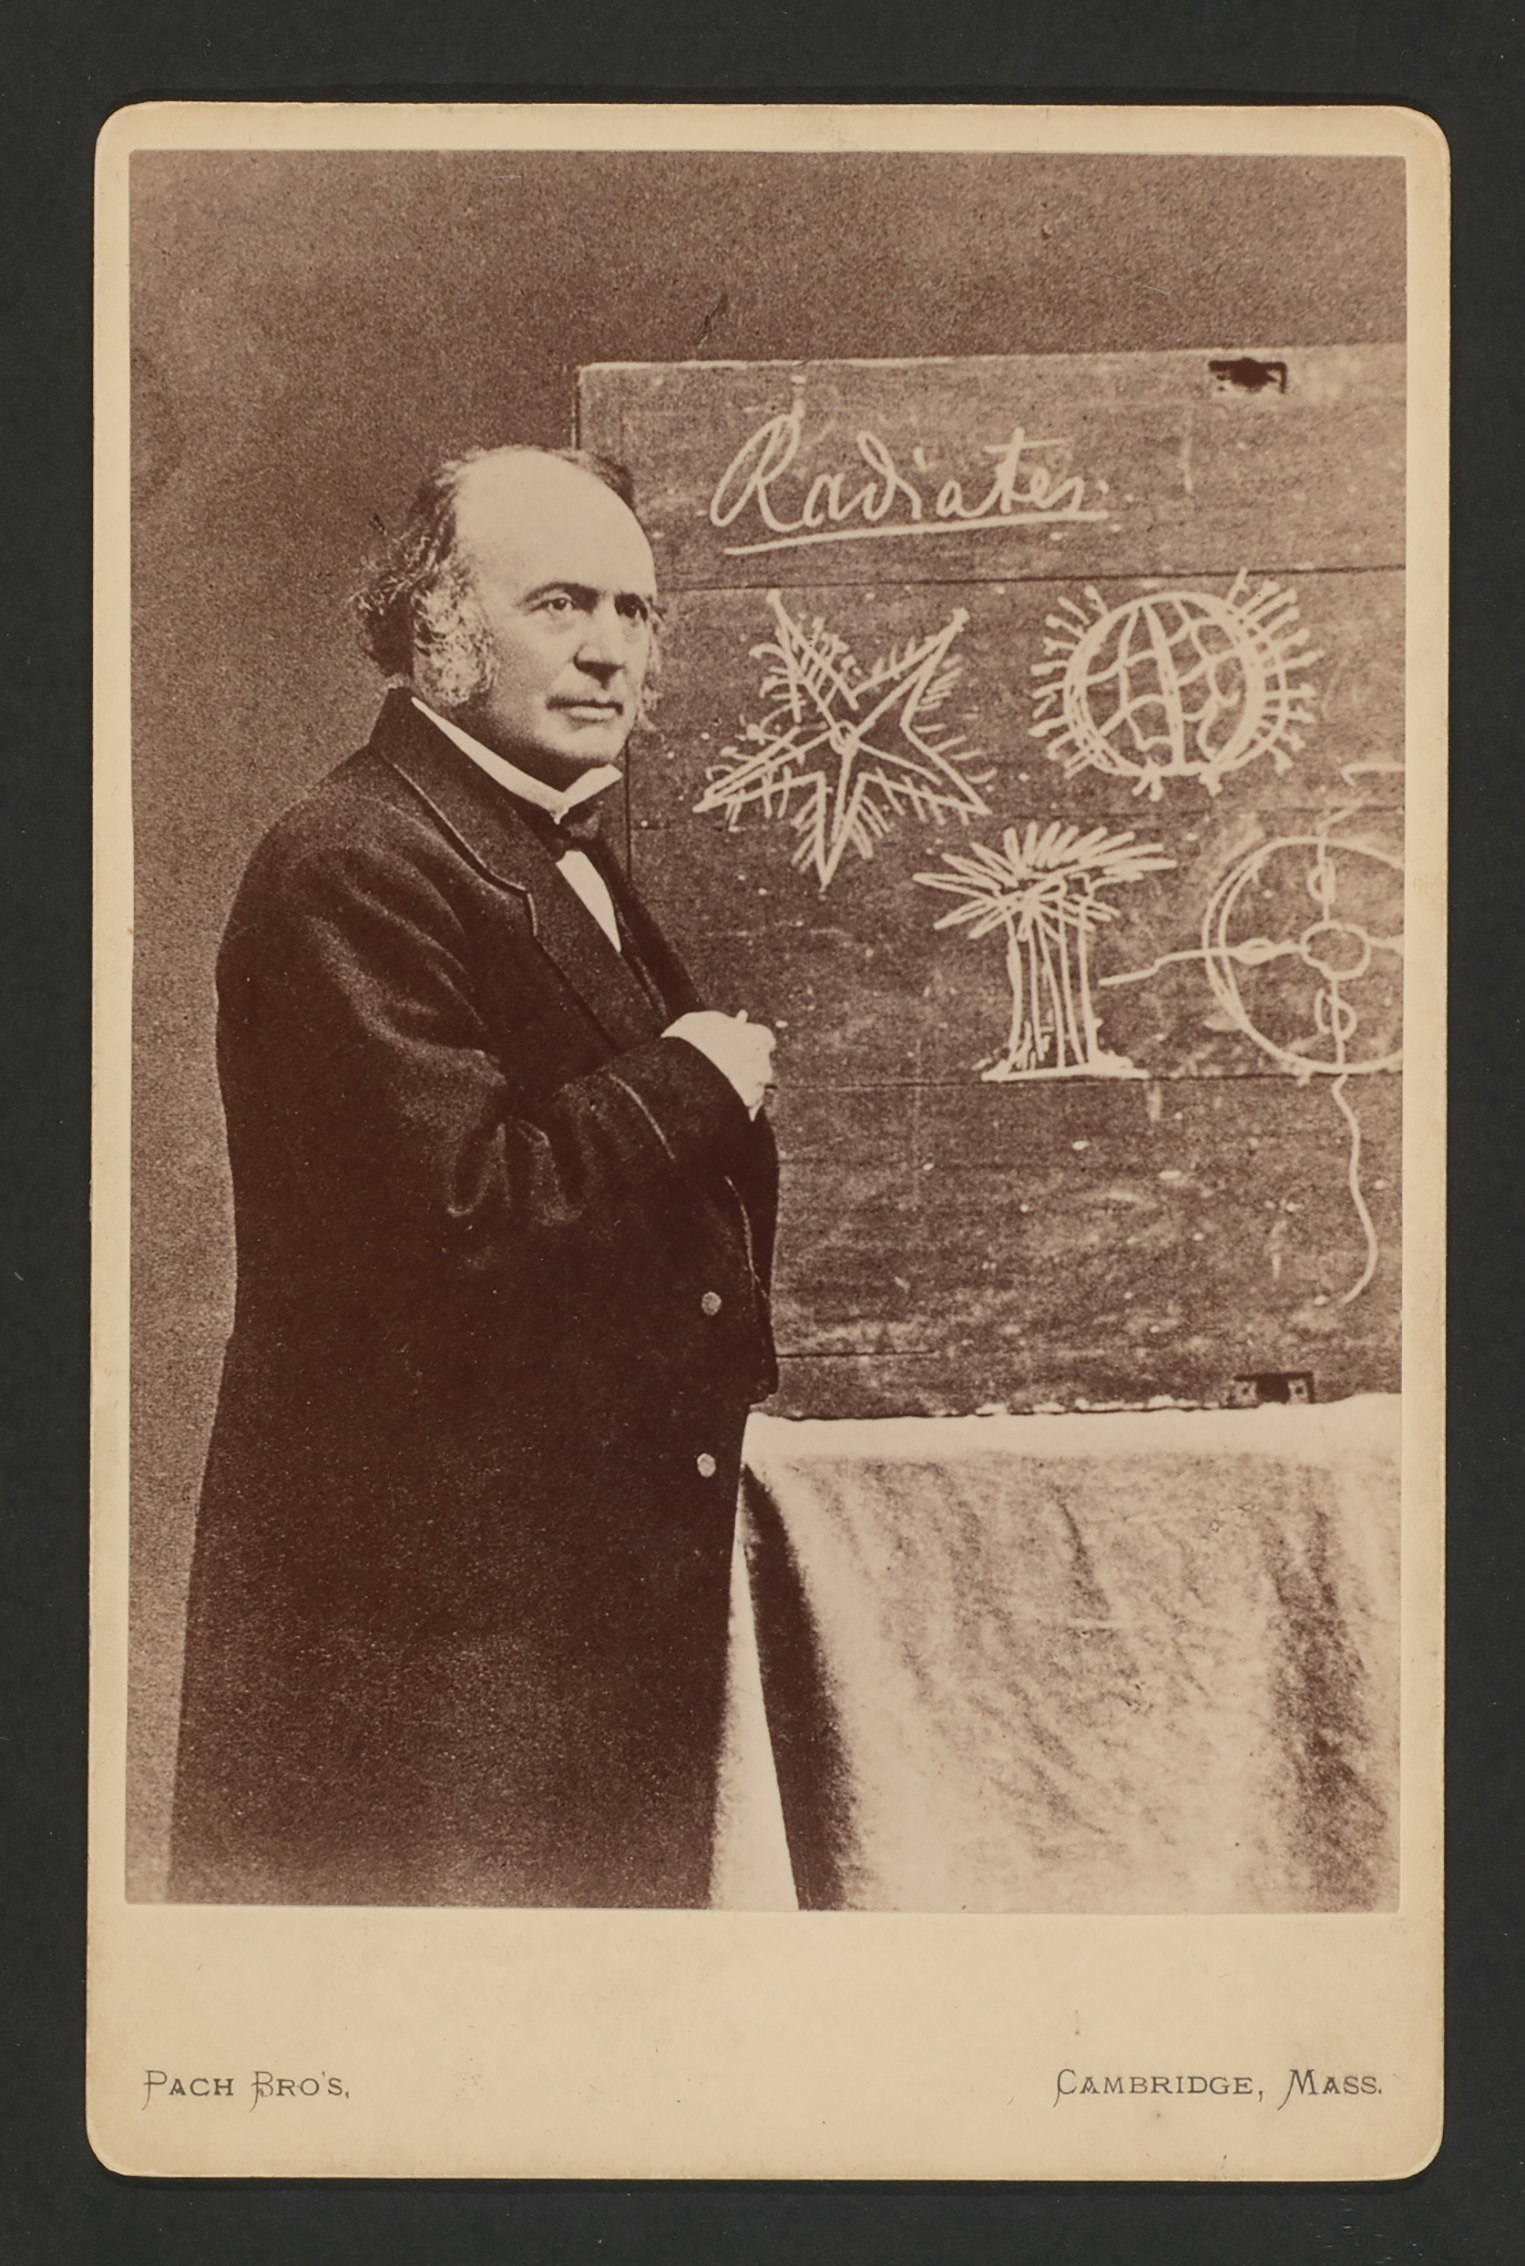 Louis Agassiz in front of a chalkboard